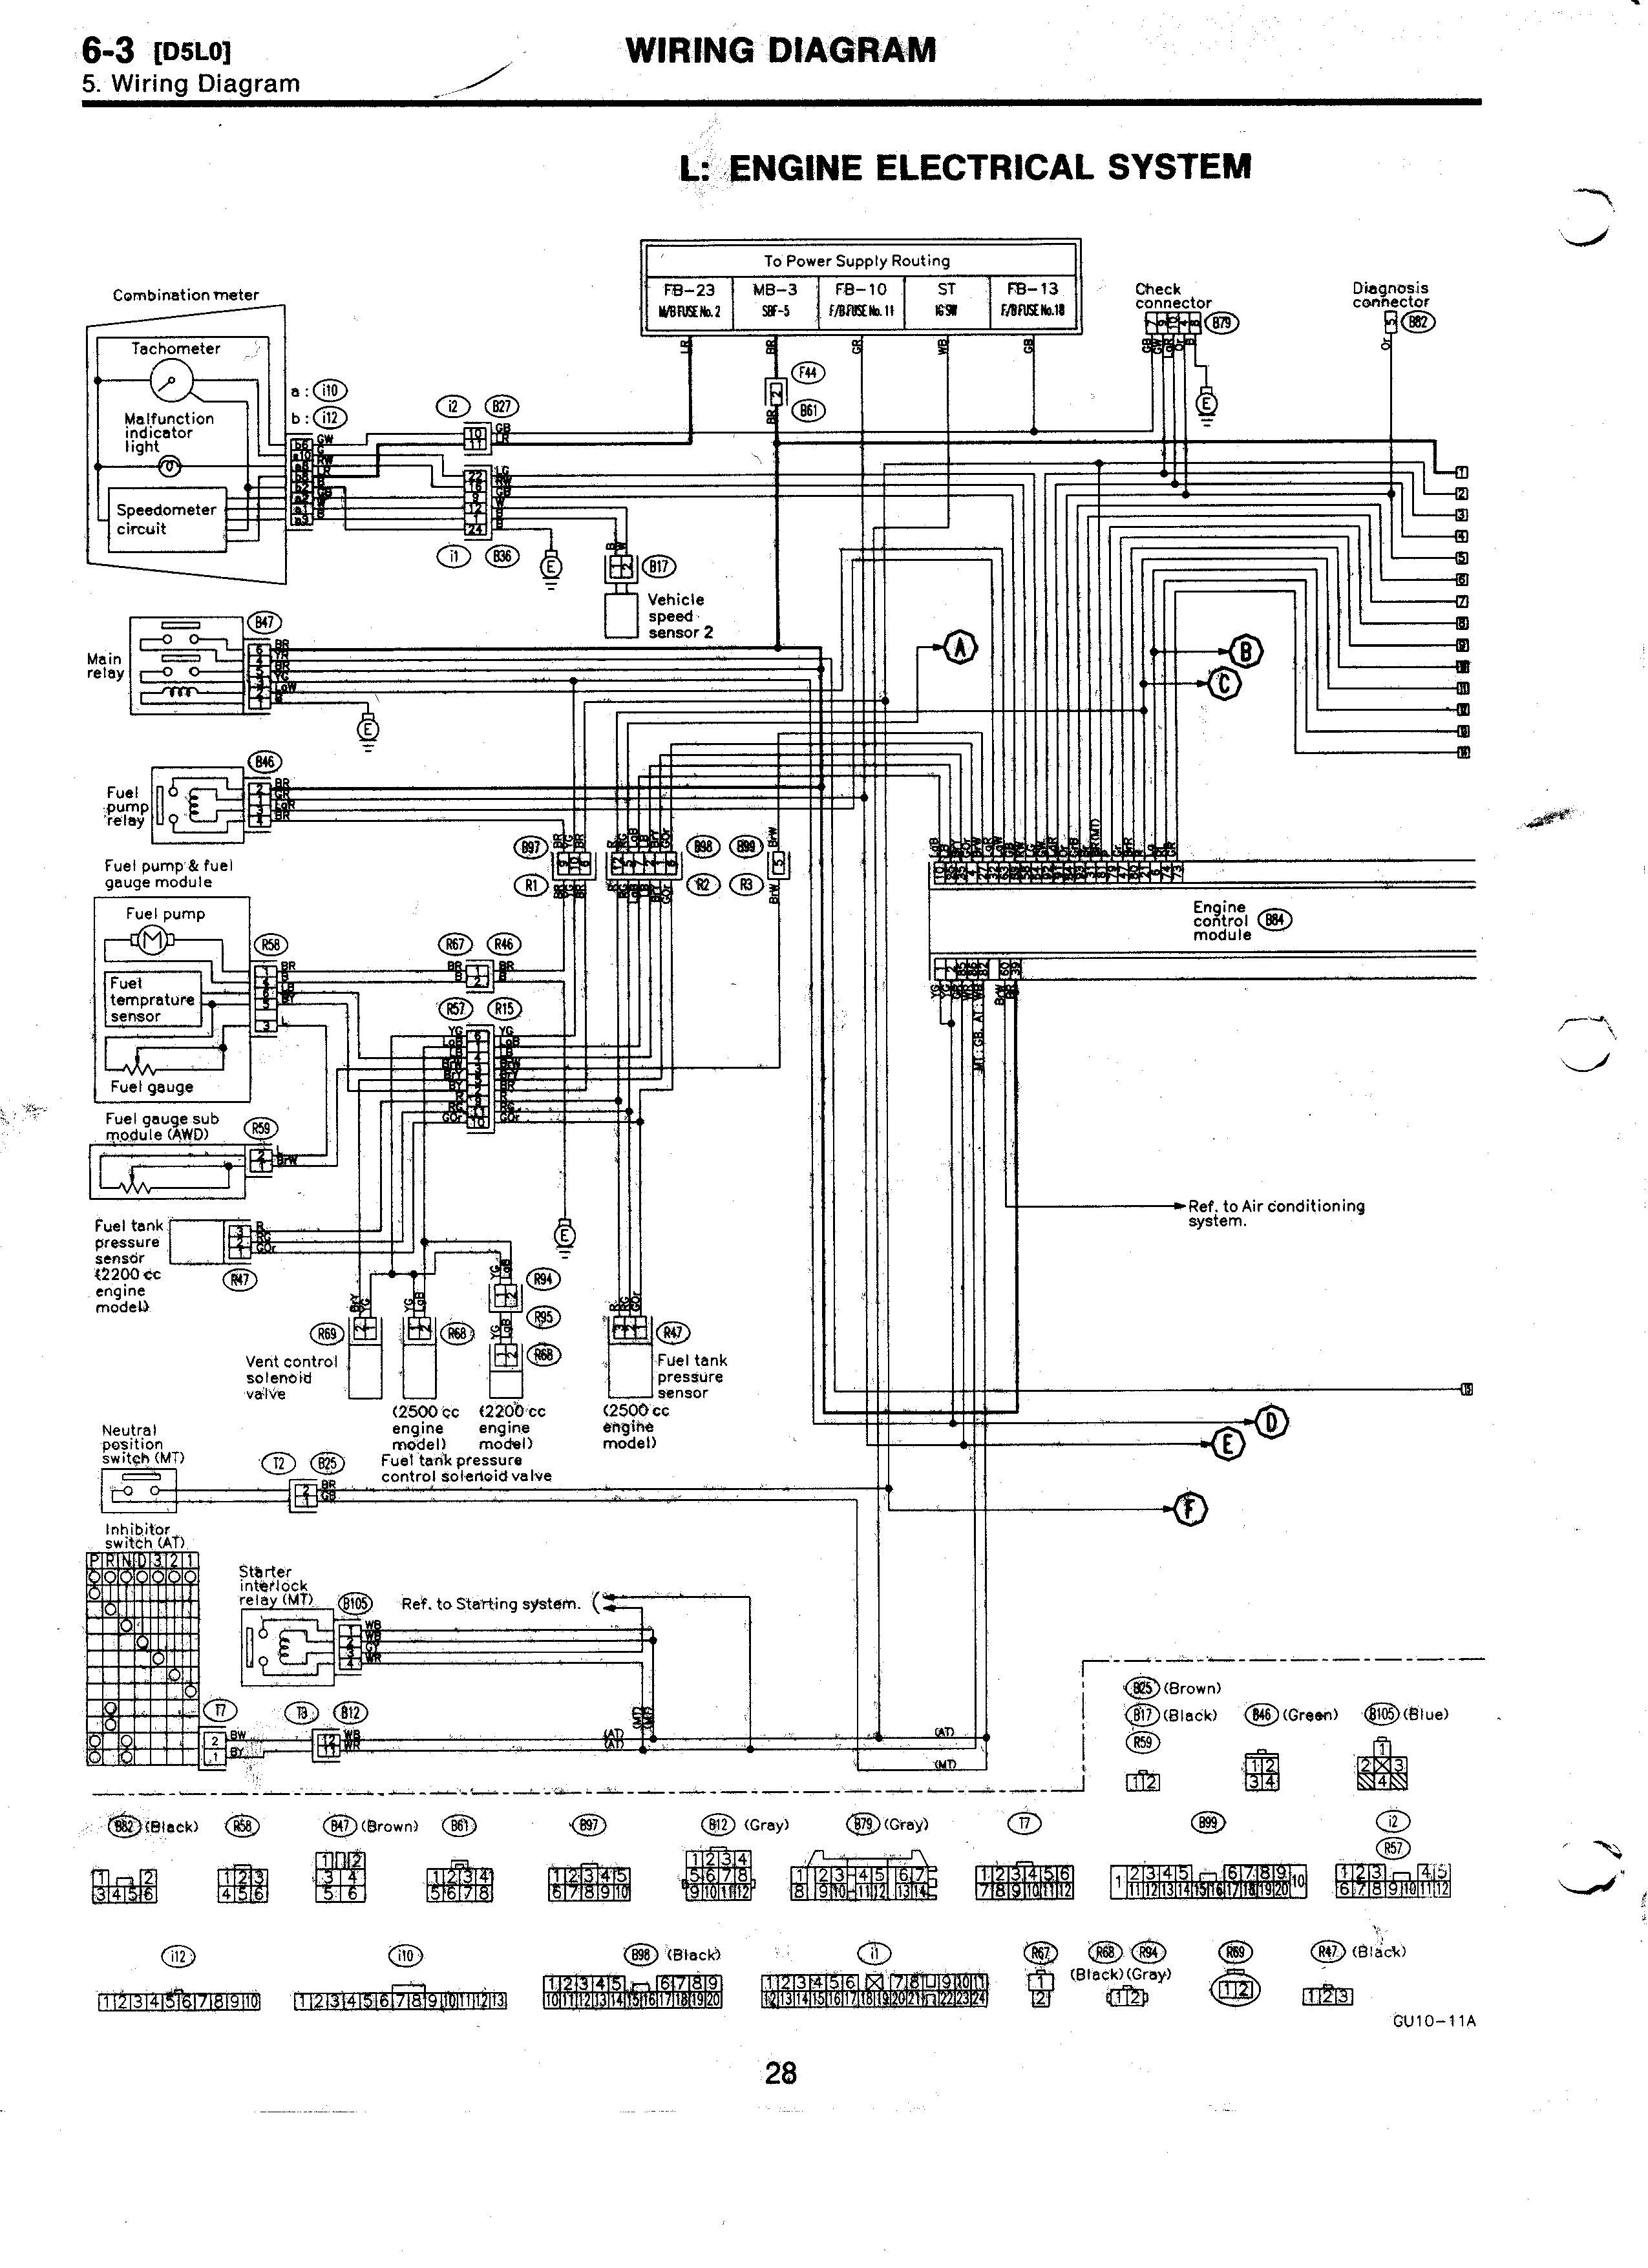 Wiring Diagram Subaru Impreza 2015 - Wiring Diagram Schemas